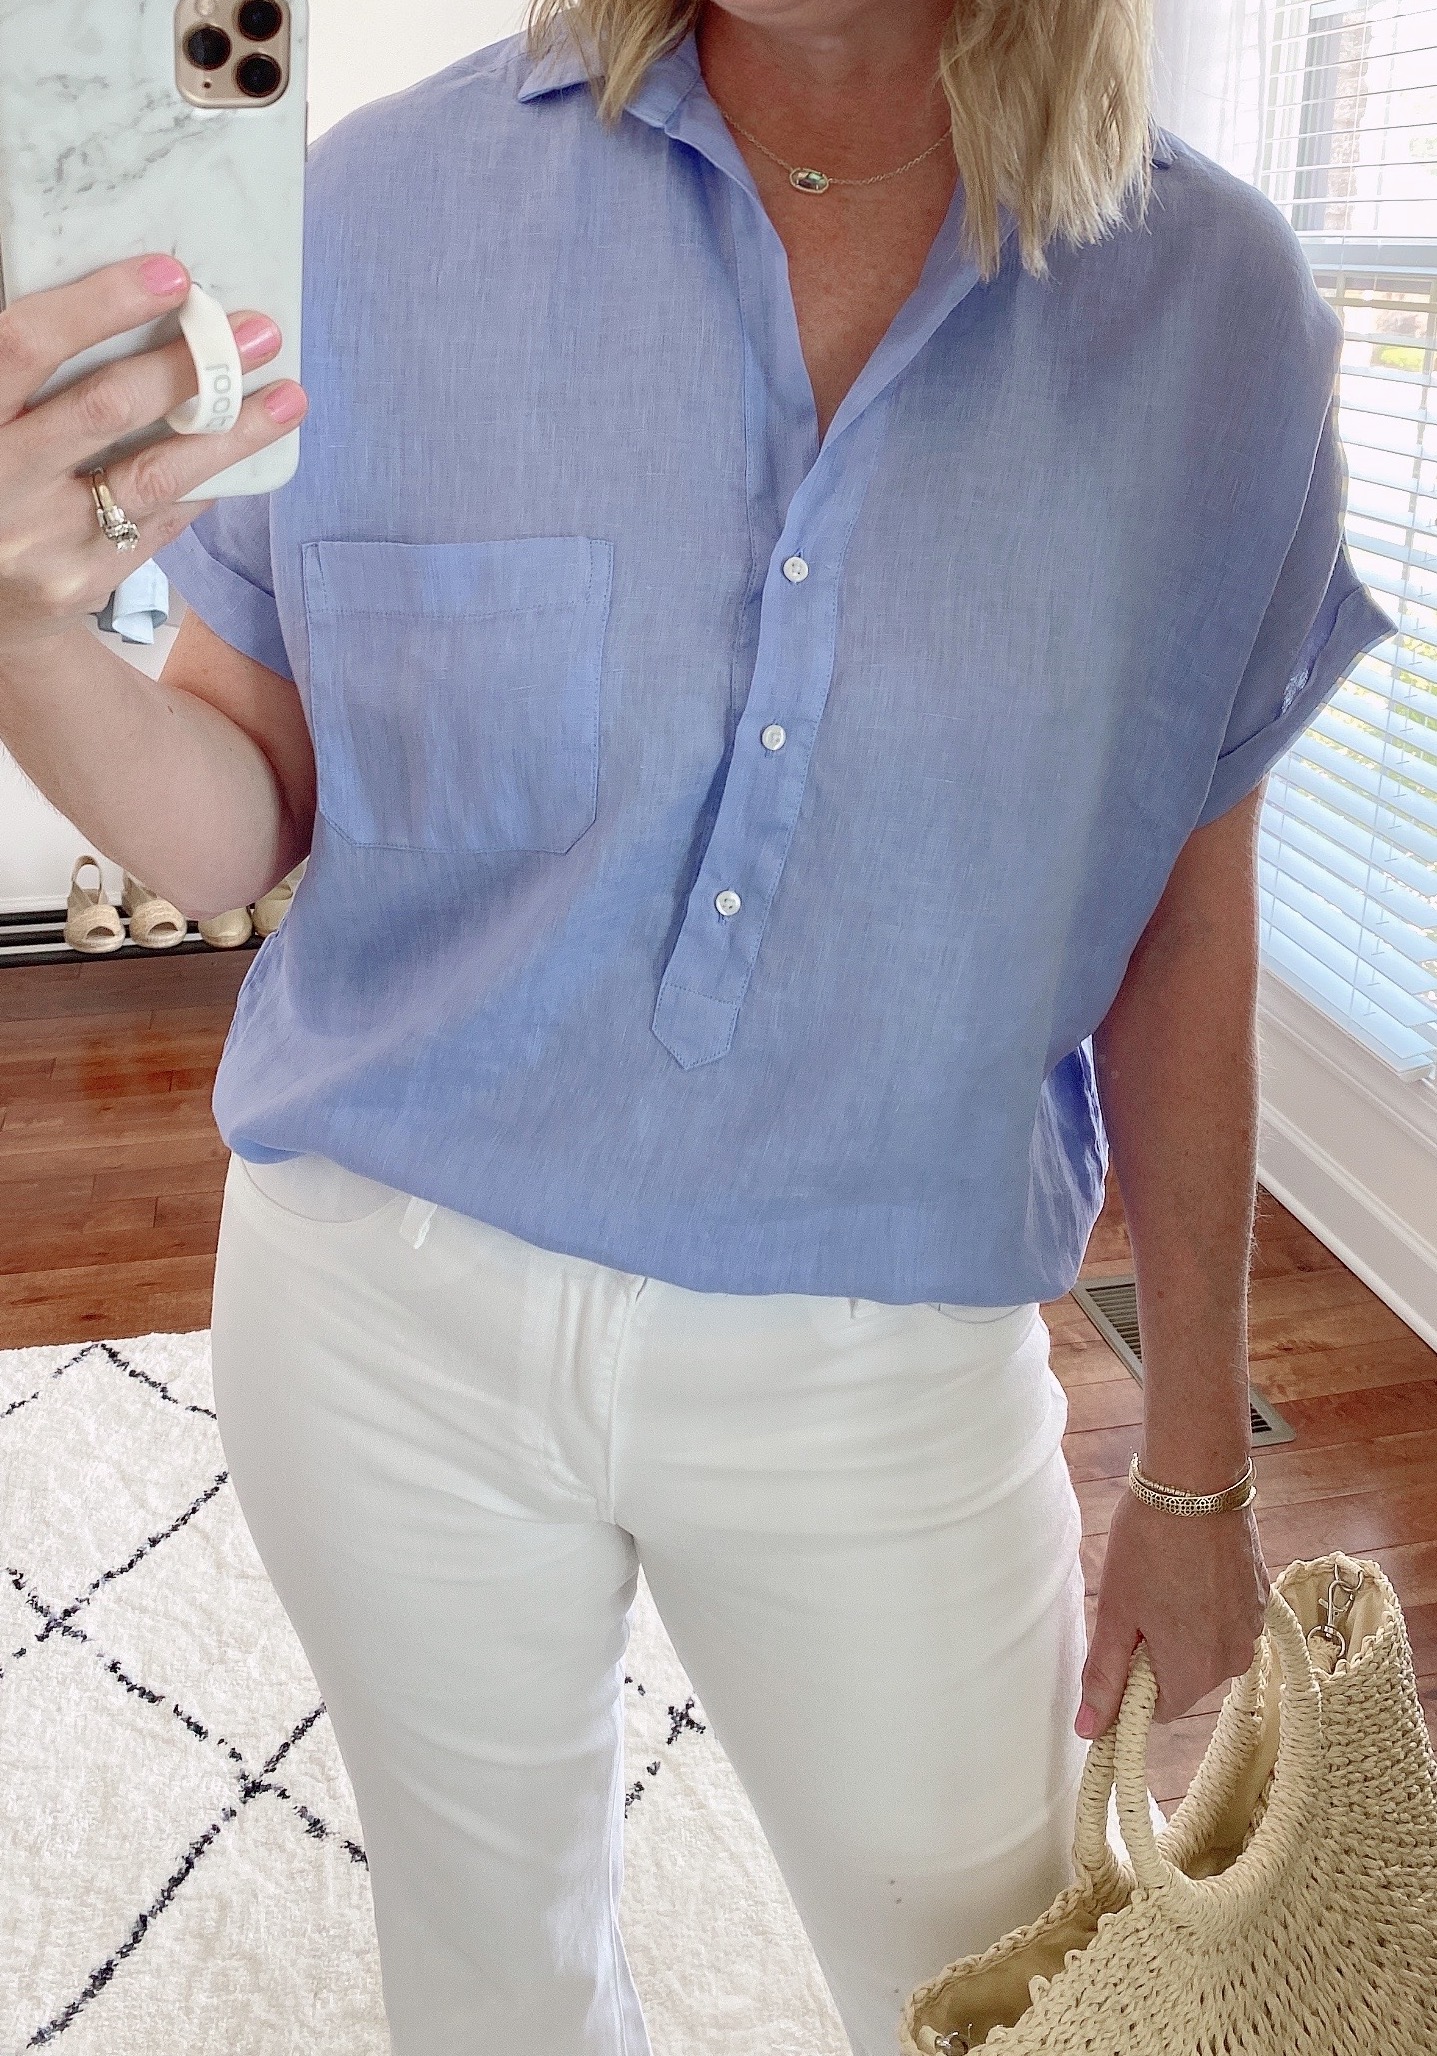 GRAYSON SHIRTS MAY 2022 - Artist Tumbled Linen Periwinkle Blue Shirt closeup